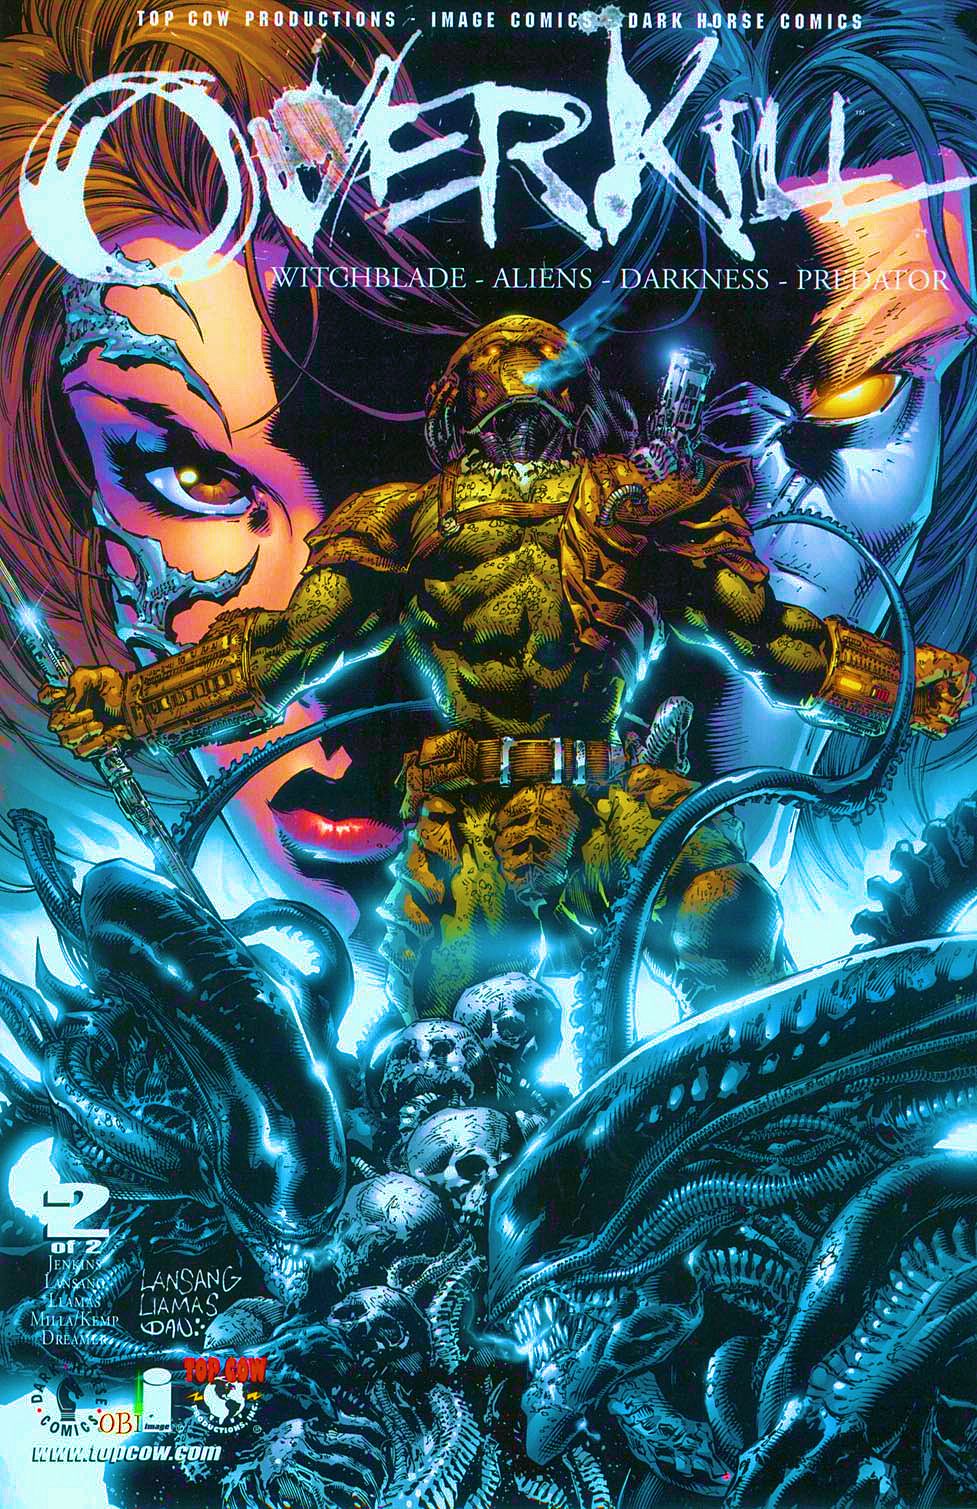 Overkill: Witchblade/Aliens/Darkness/Predator issue 2 - Page 1